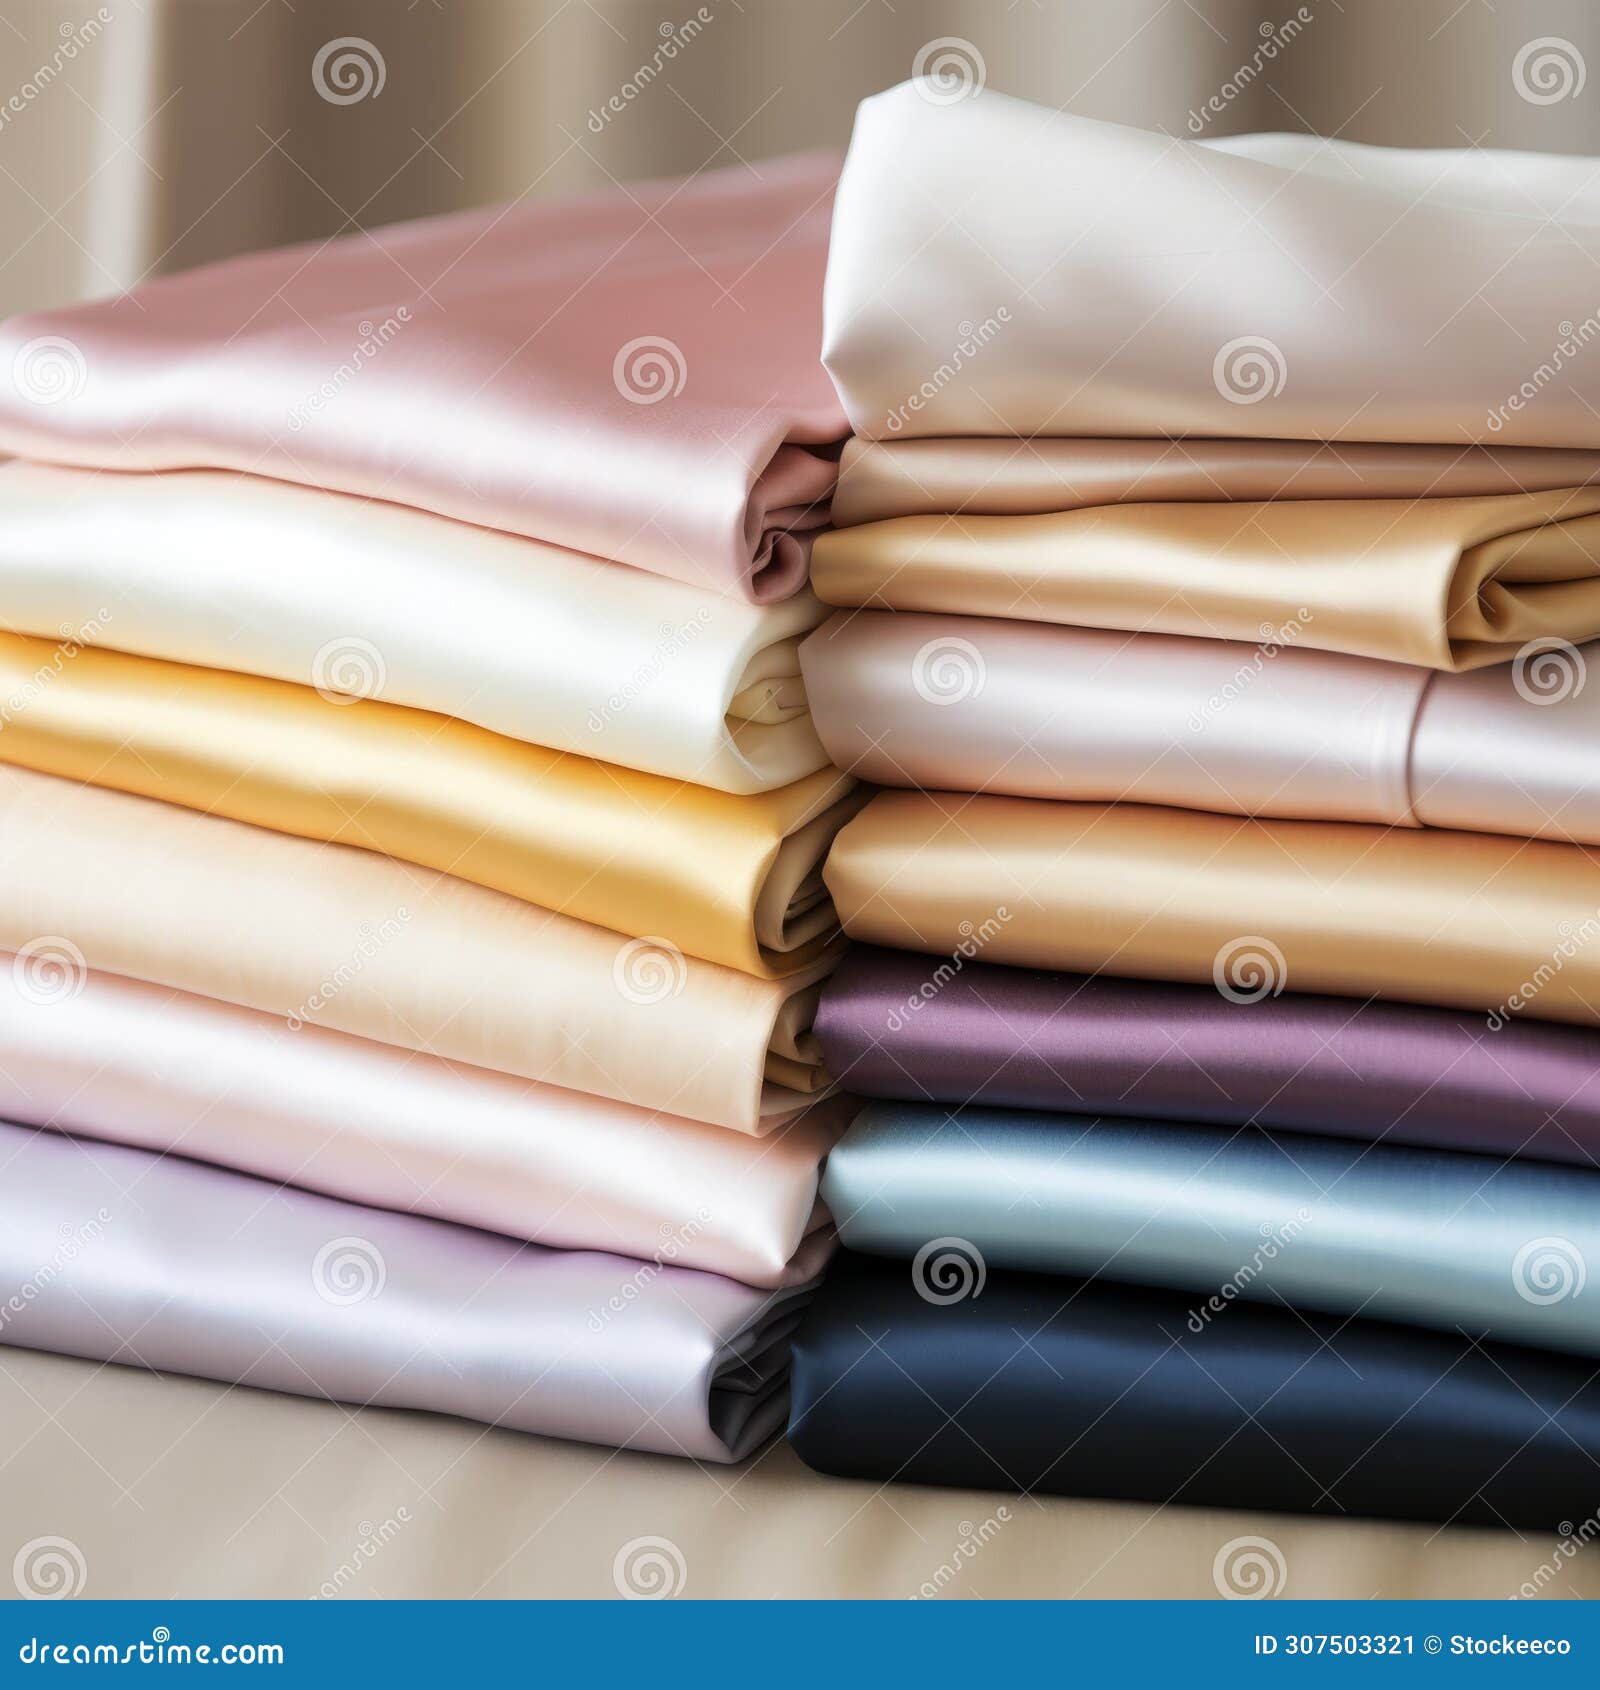 luxurious silk sheets in steve henderson style - shantung plain sheet